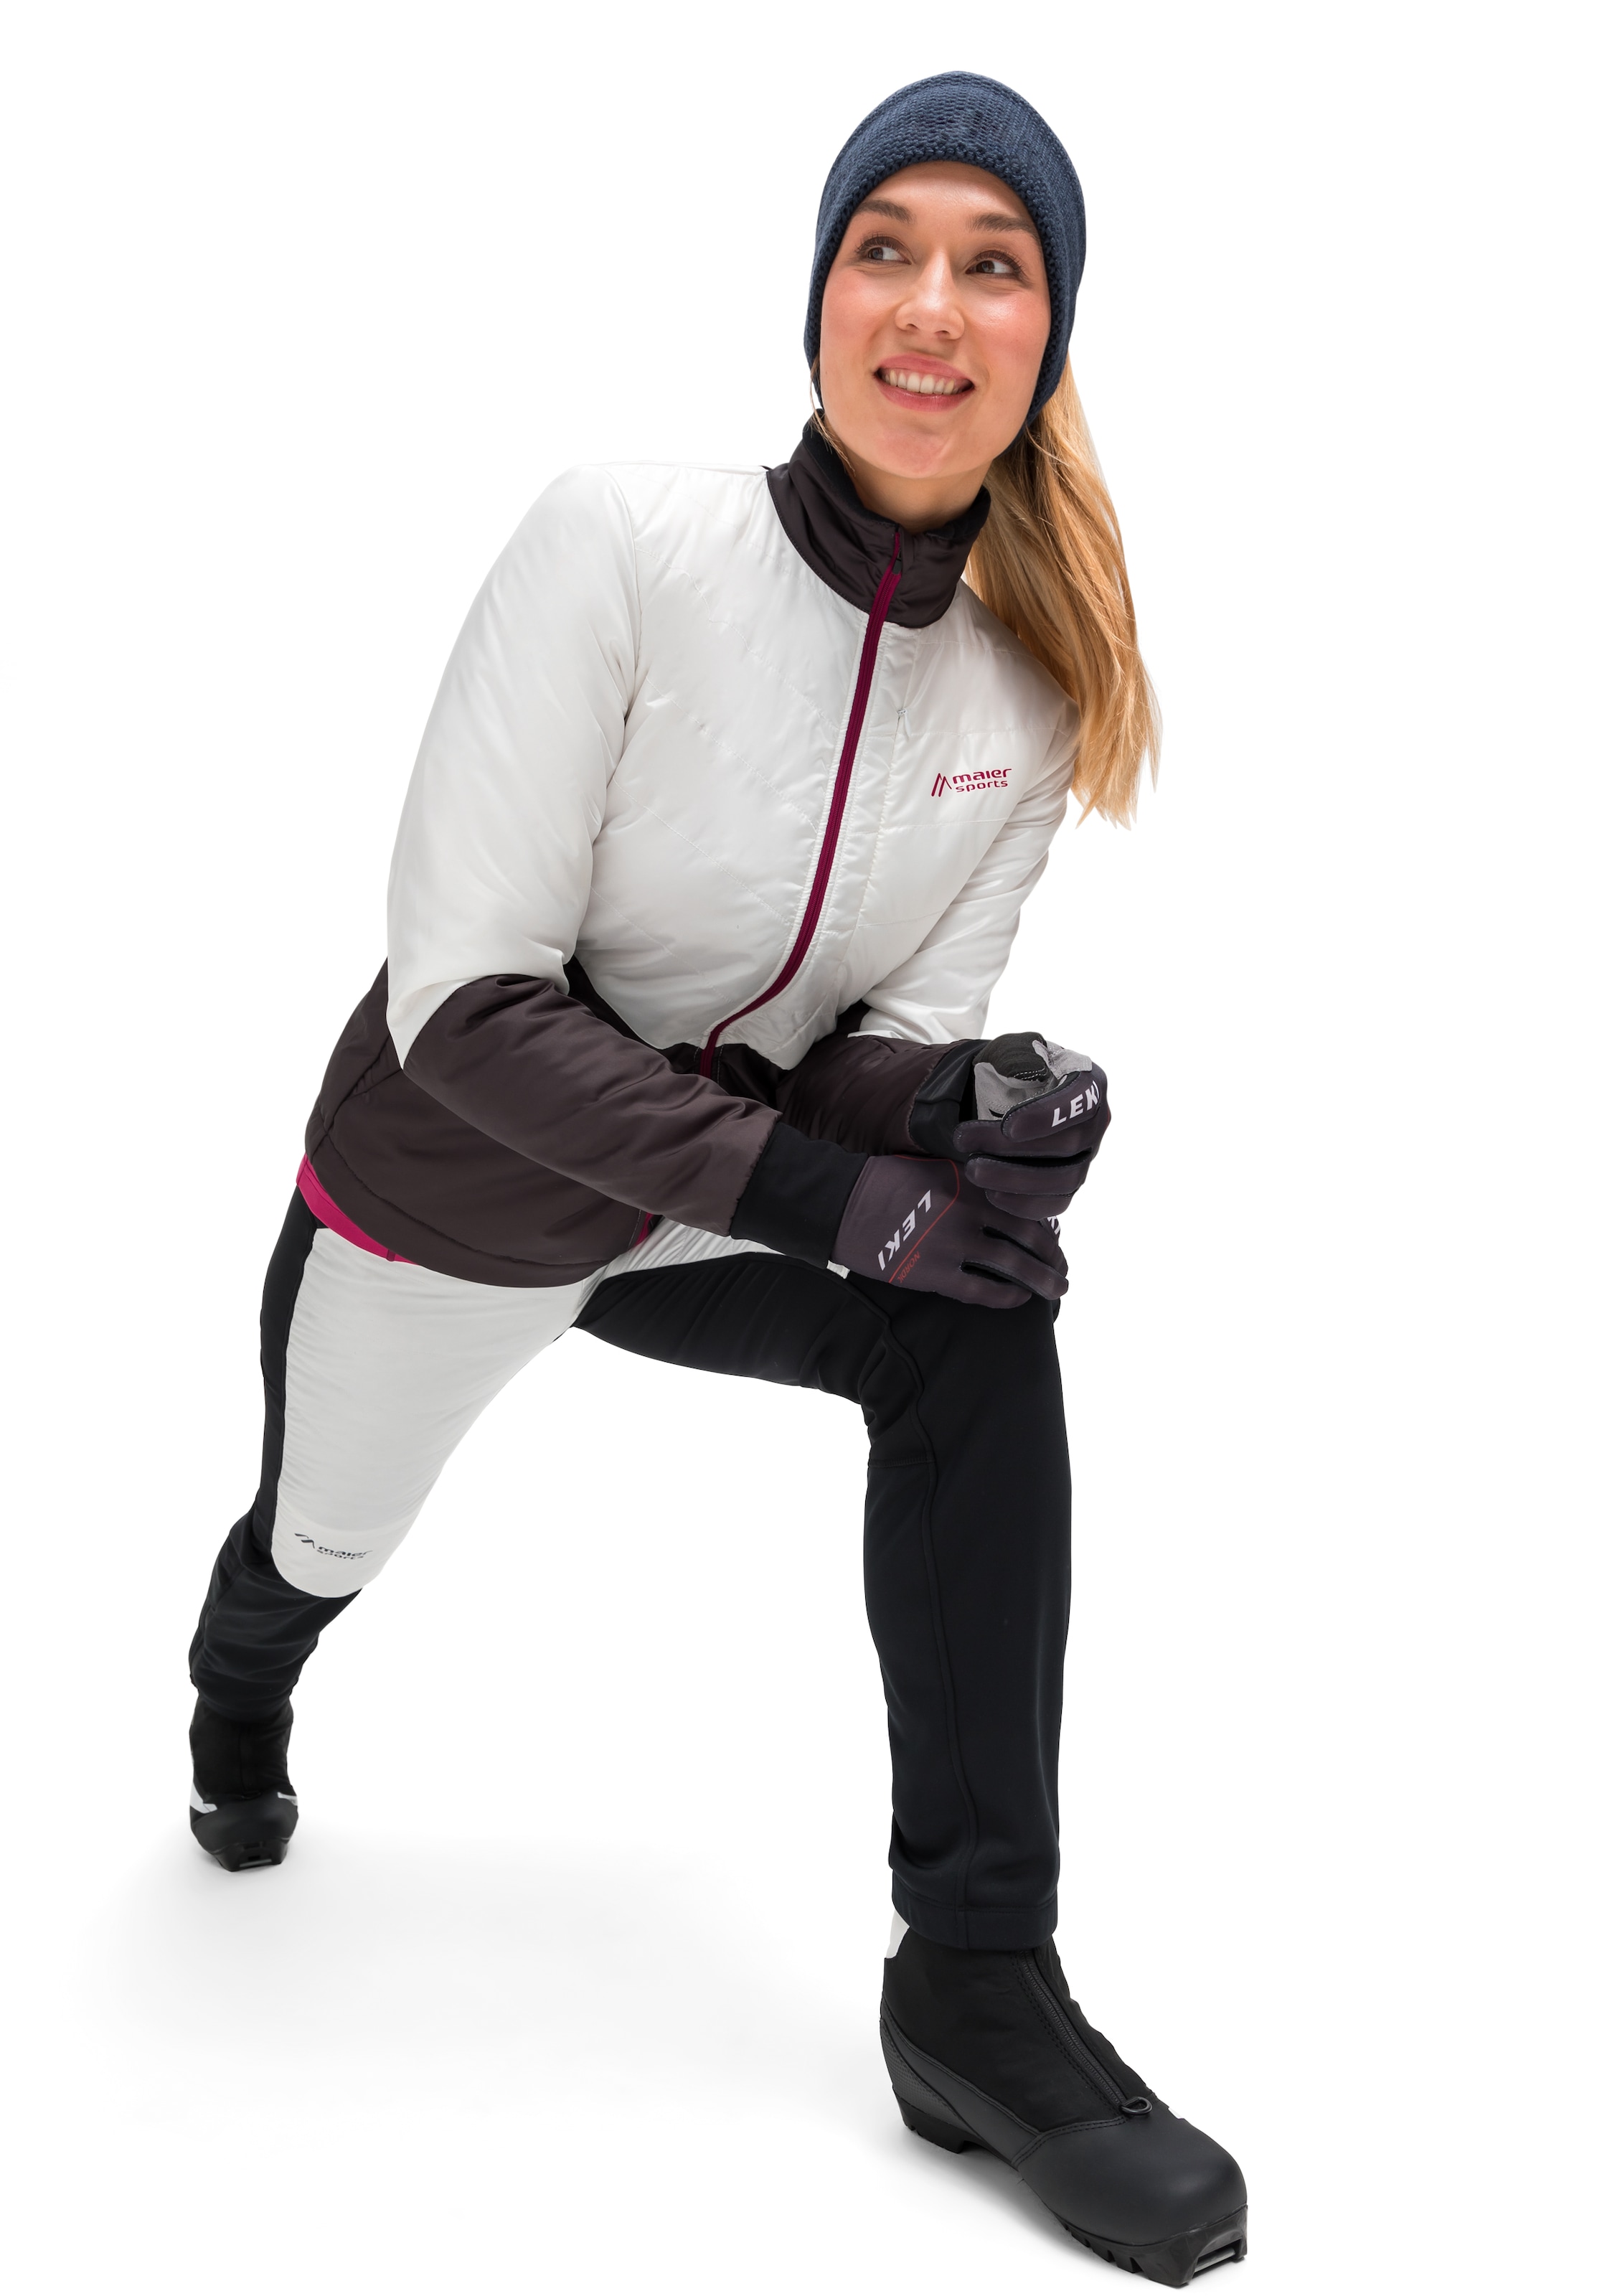 Maier Sports Skijacke »Skjoma Wool W«, Damen Langlaufjacke, wattierte  Outdoorjacke mit 3 geräumige Taschen online bestellen | BAUR